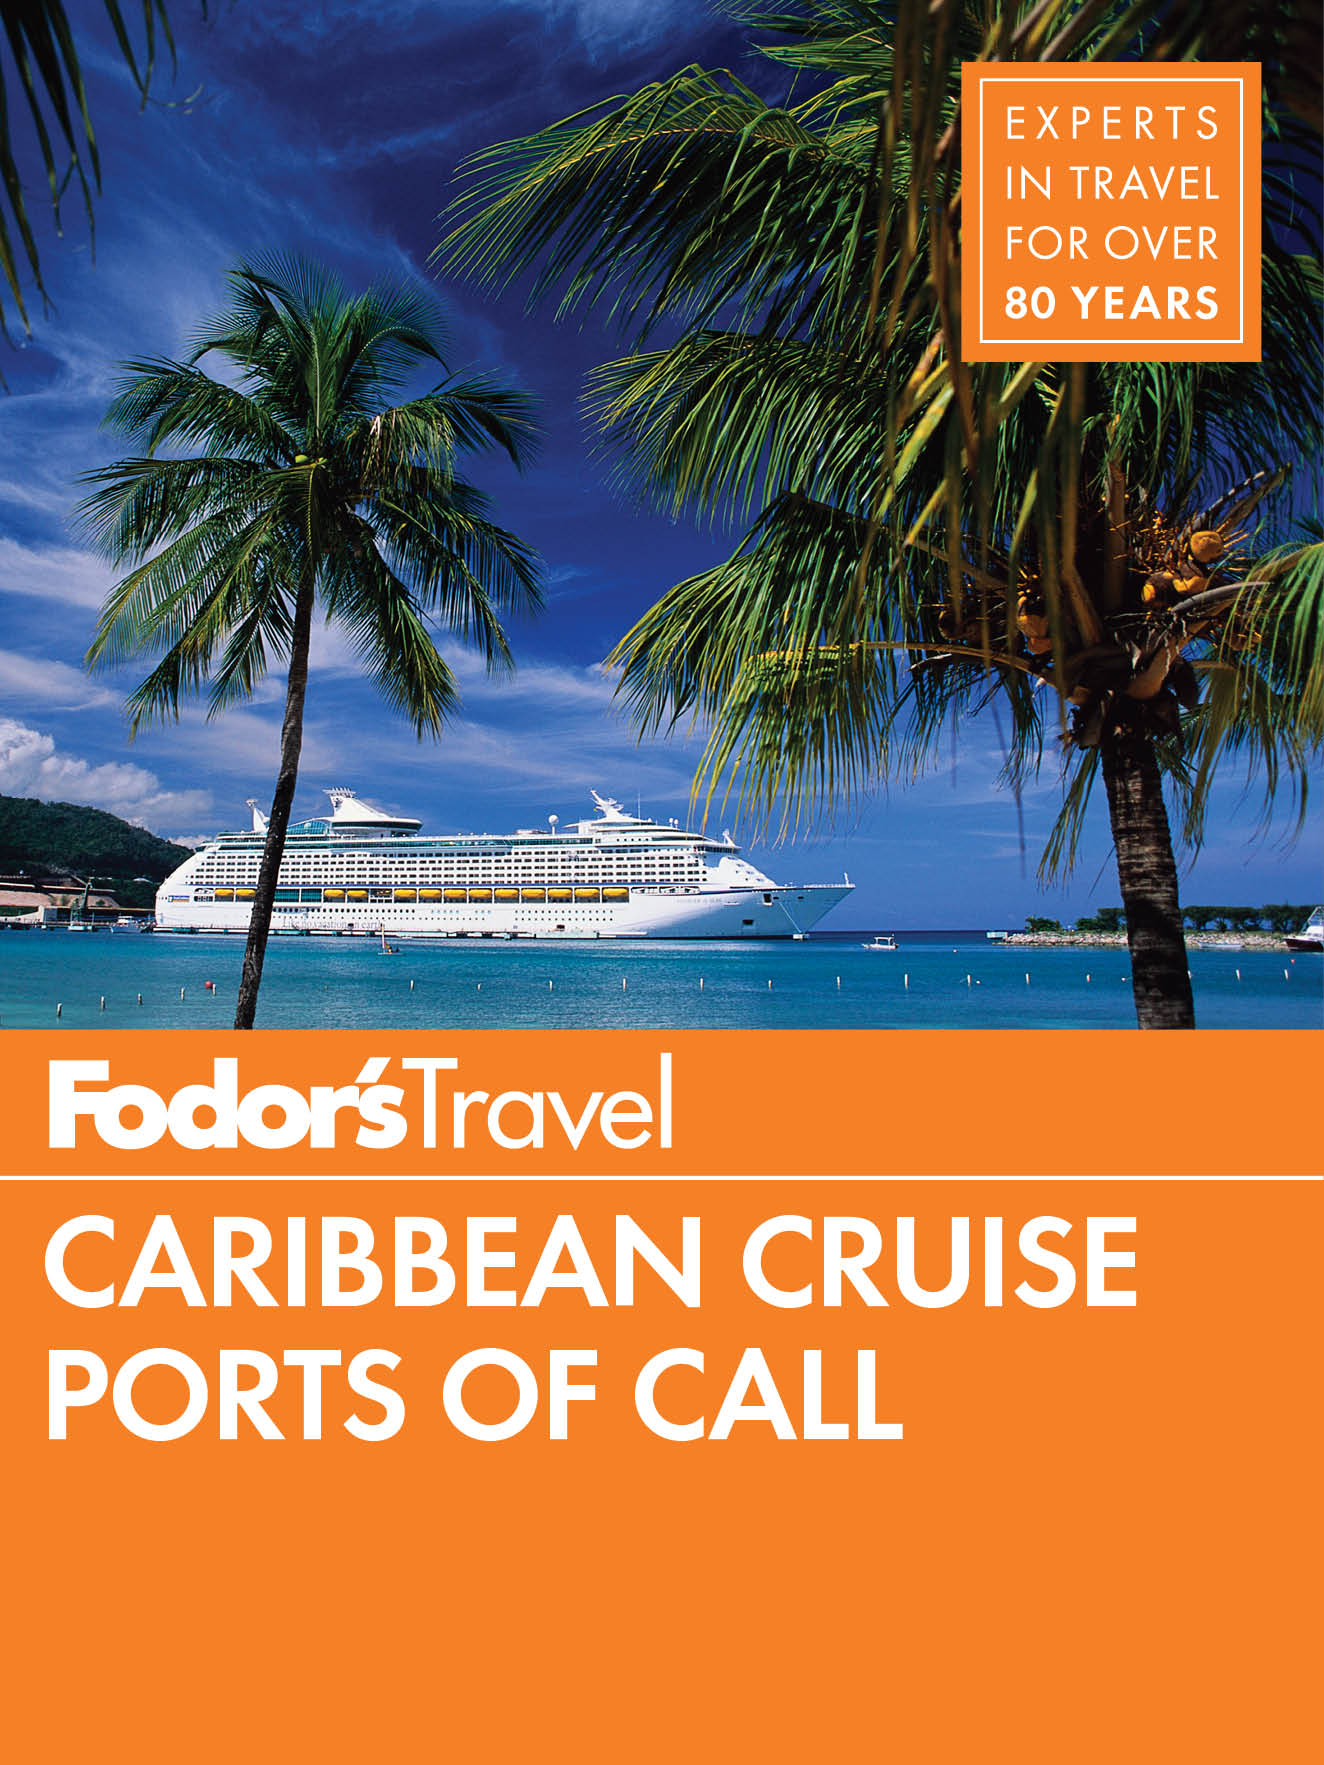 Fodors Caribbean Cruise Ports of Call - photo 1